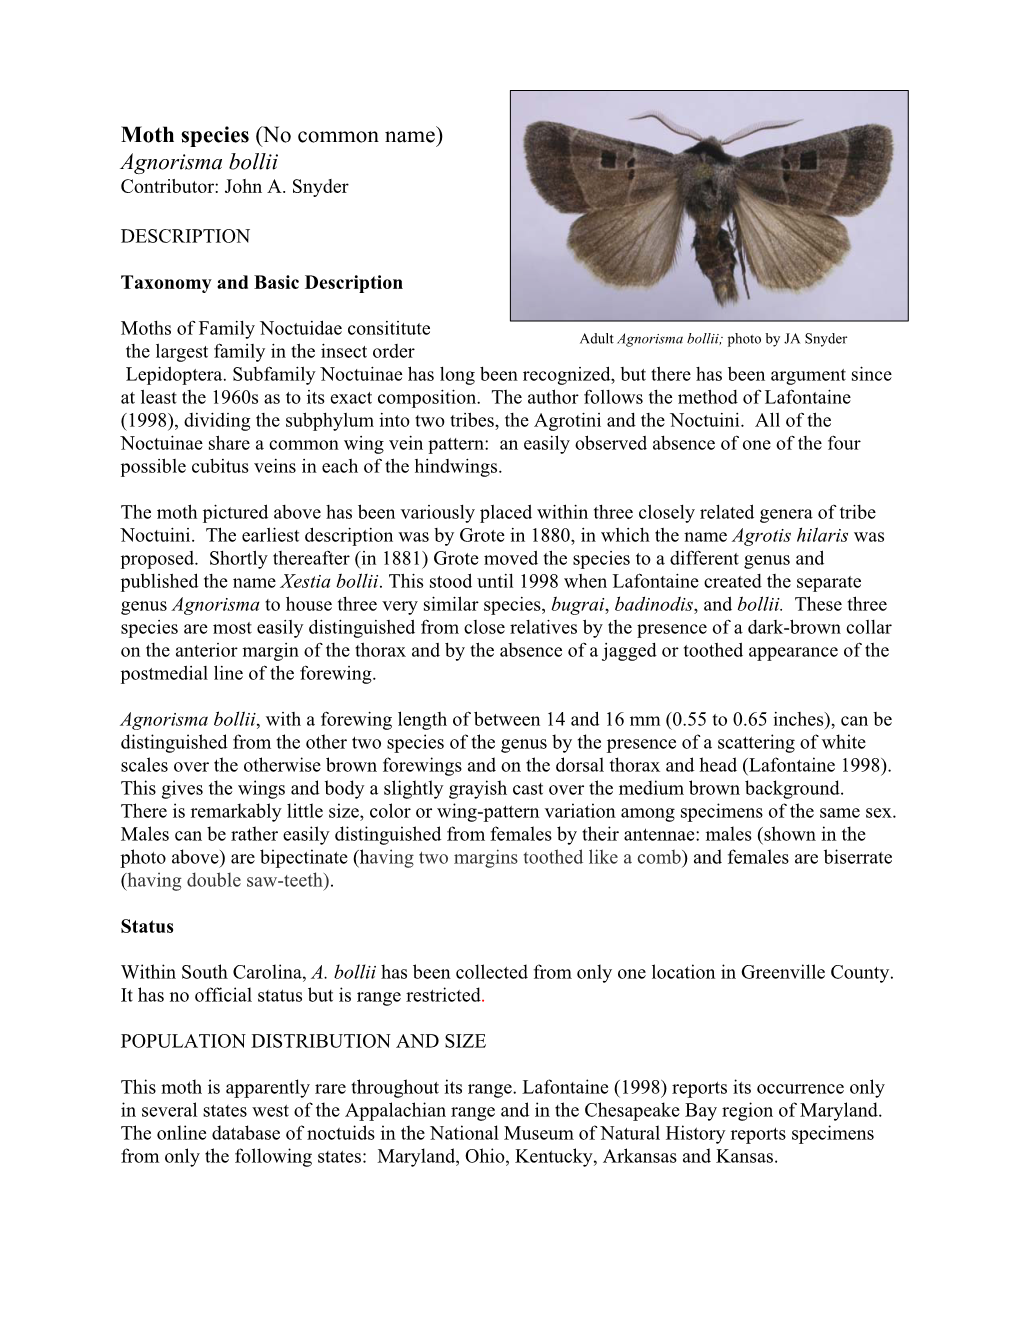 Moth Species (No Common Name) Agnorisma Bollii Contributor: John A